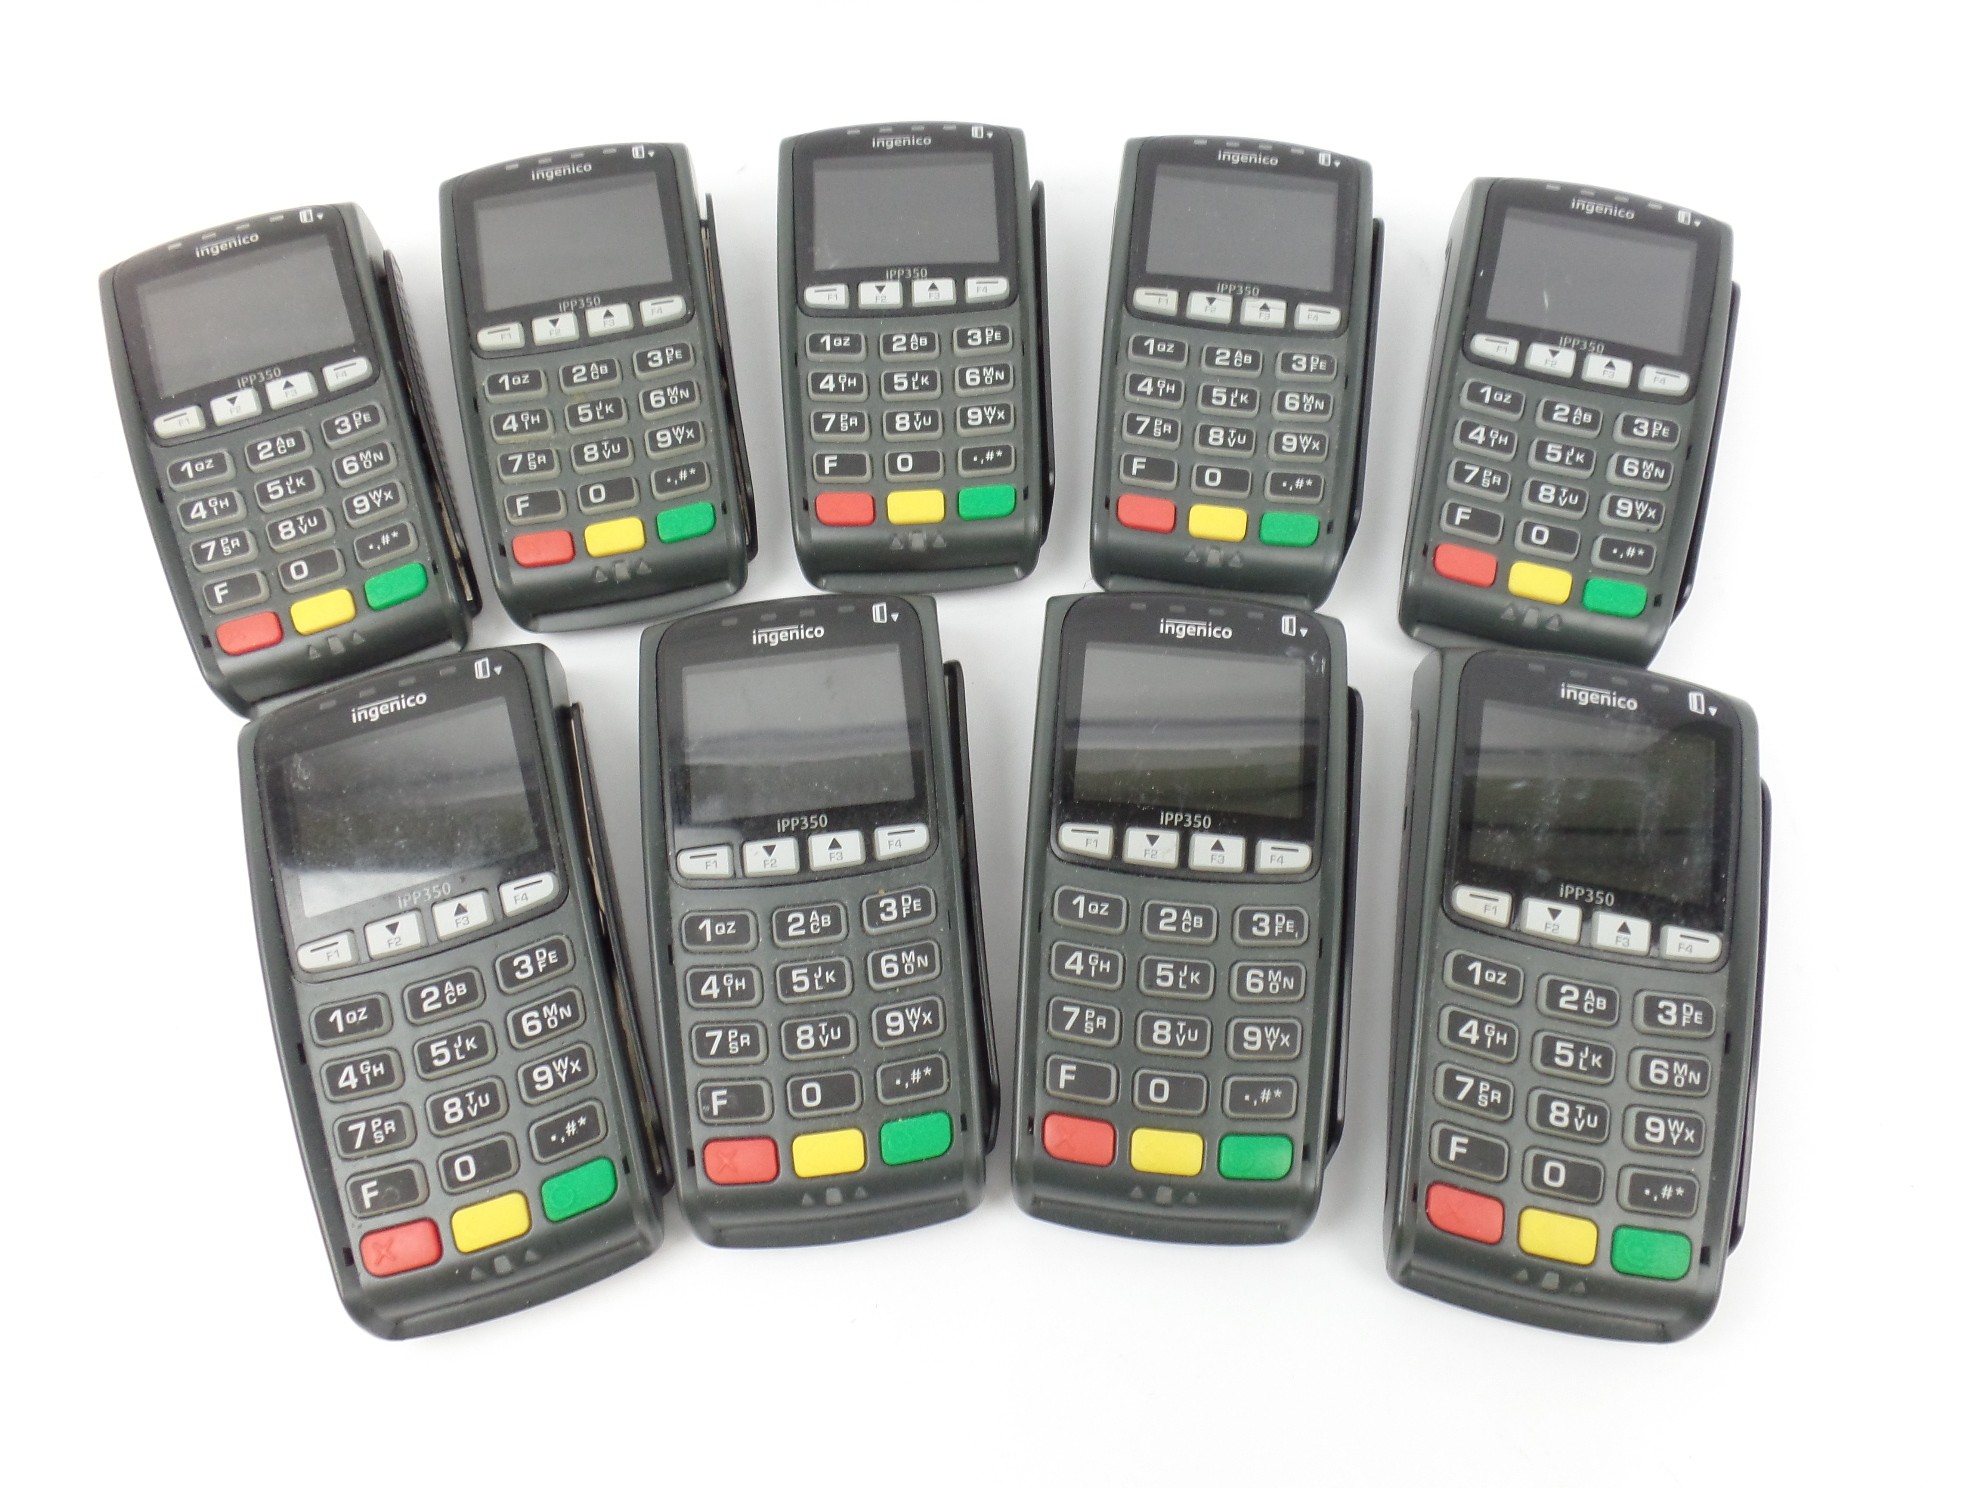 Lot of 9 Ingenico IPP 350 2.7" IPP350 PIN PAD Credit Card Reader Terminal